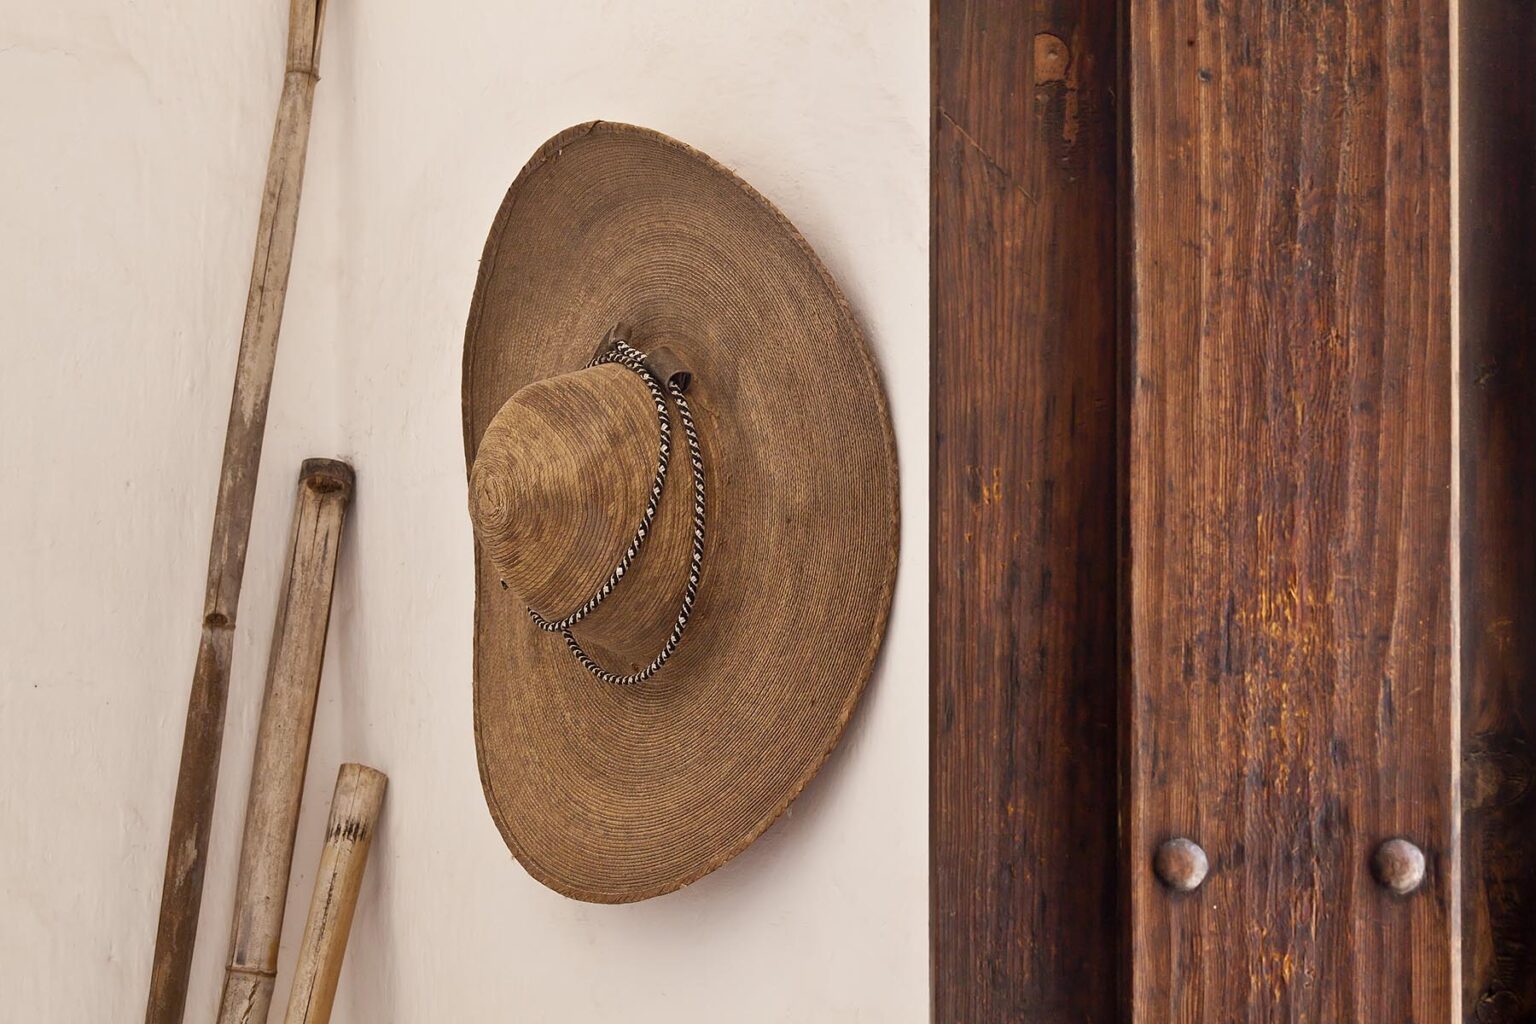 A hat on a wall - MINERAL DE POZOS,  GUANAJUATO, MEXICO